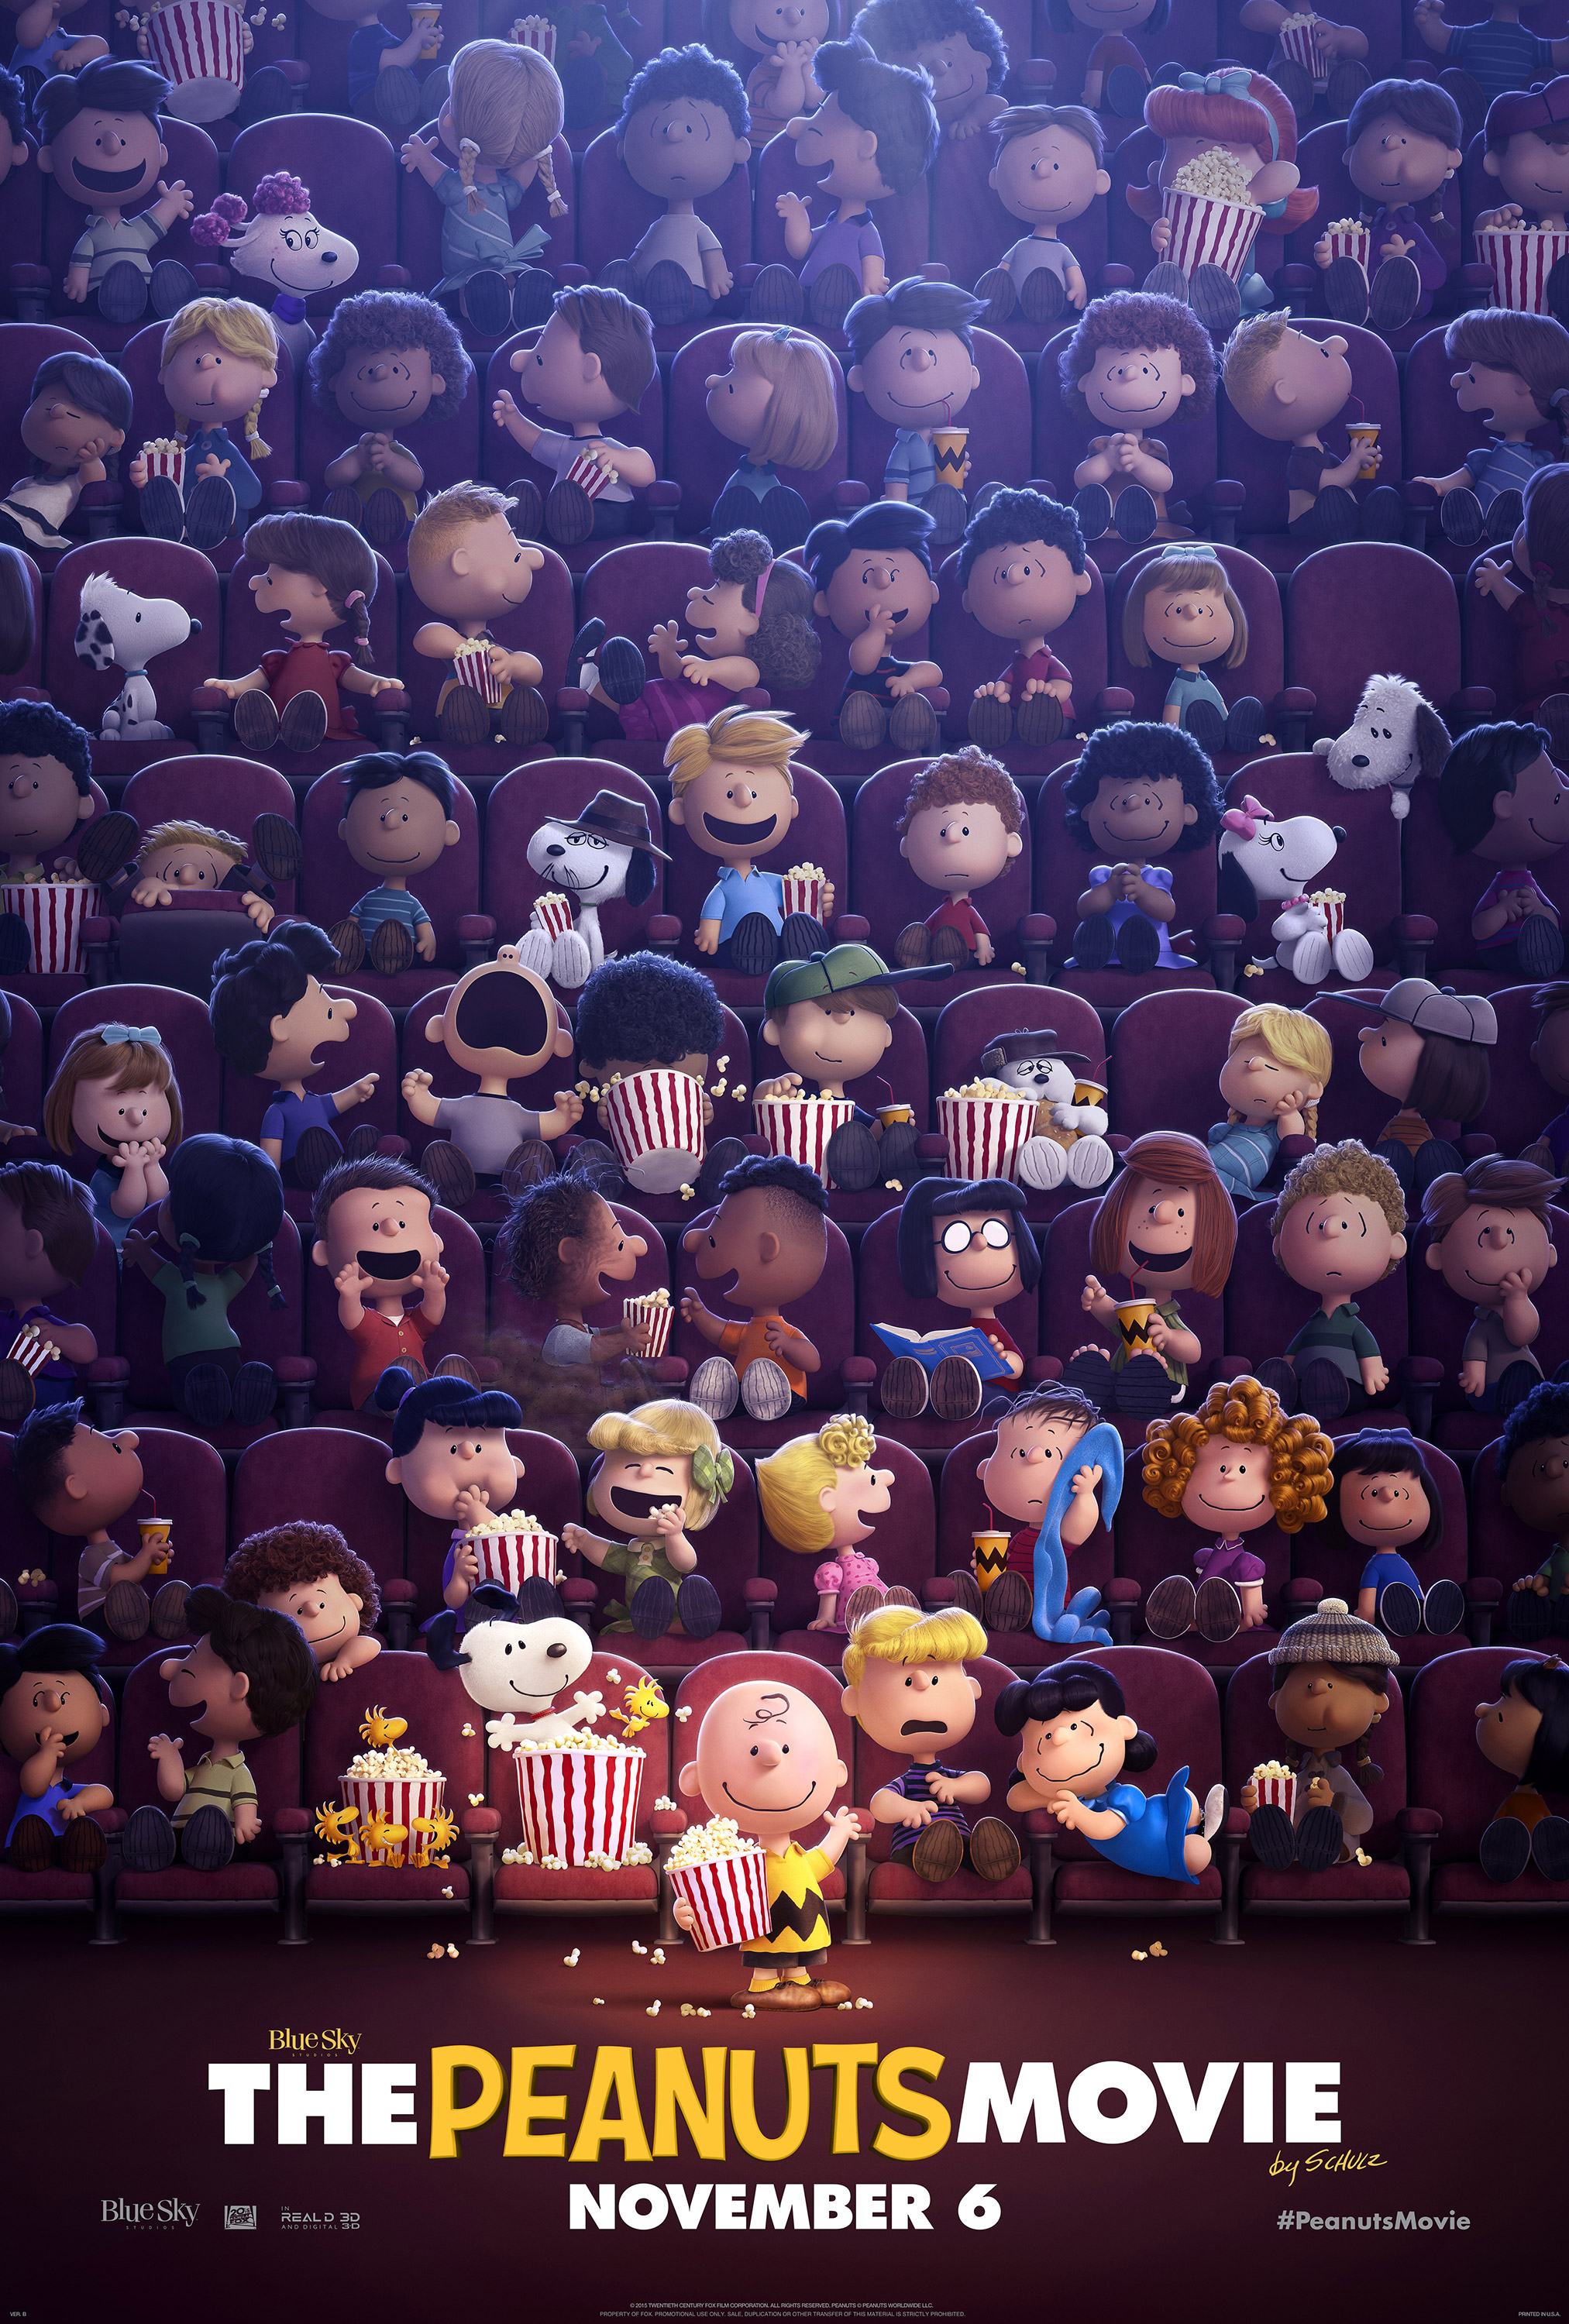 The Peanuts Movie | Twilight Sparkle's Retro Media Library | Fandom